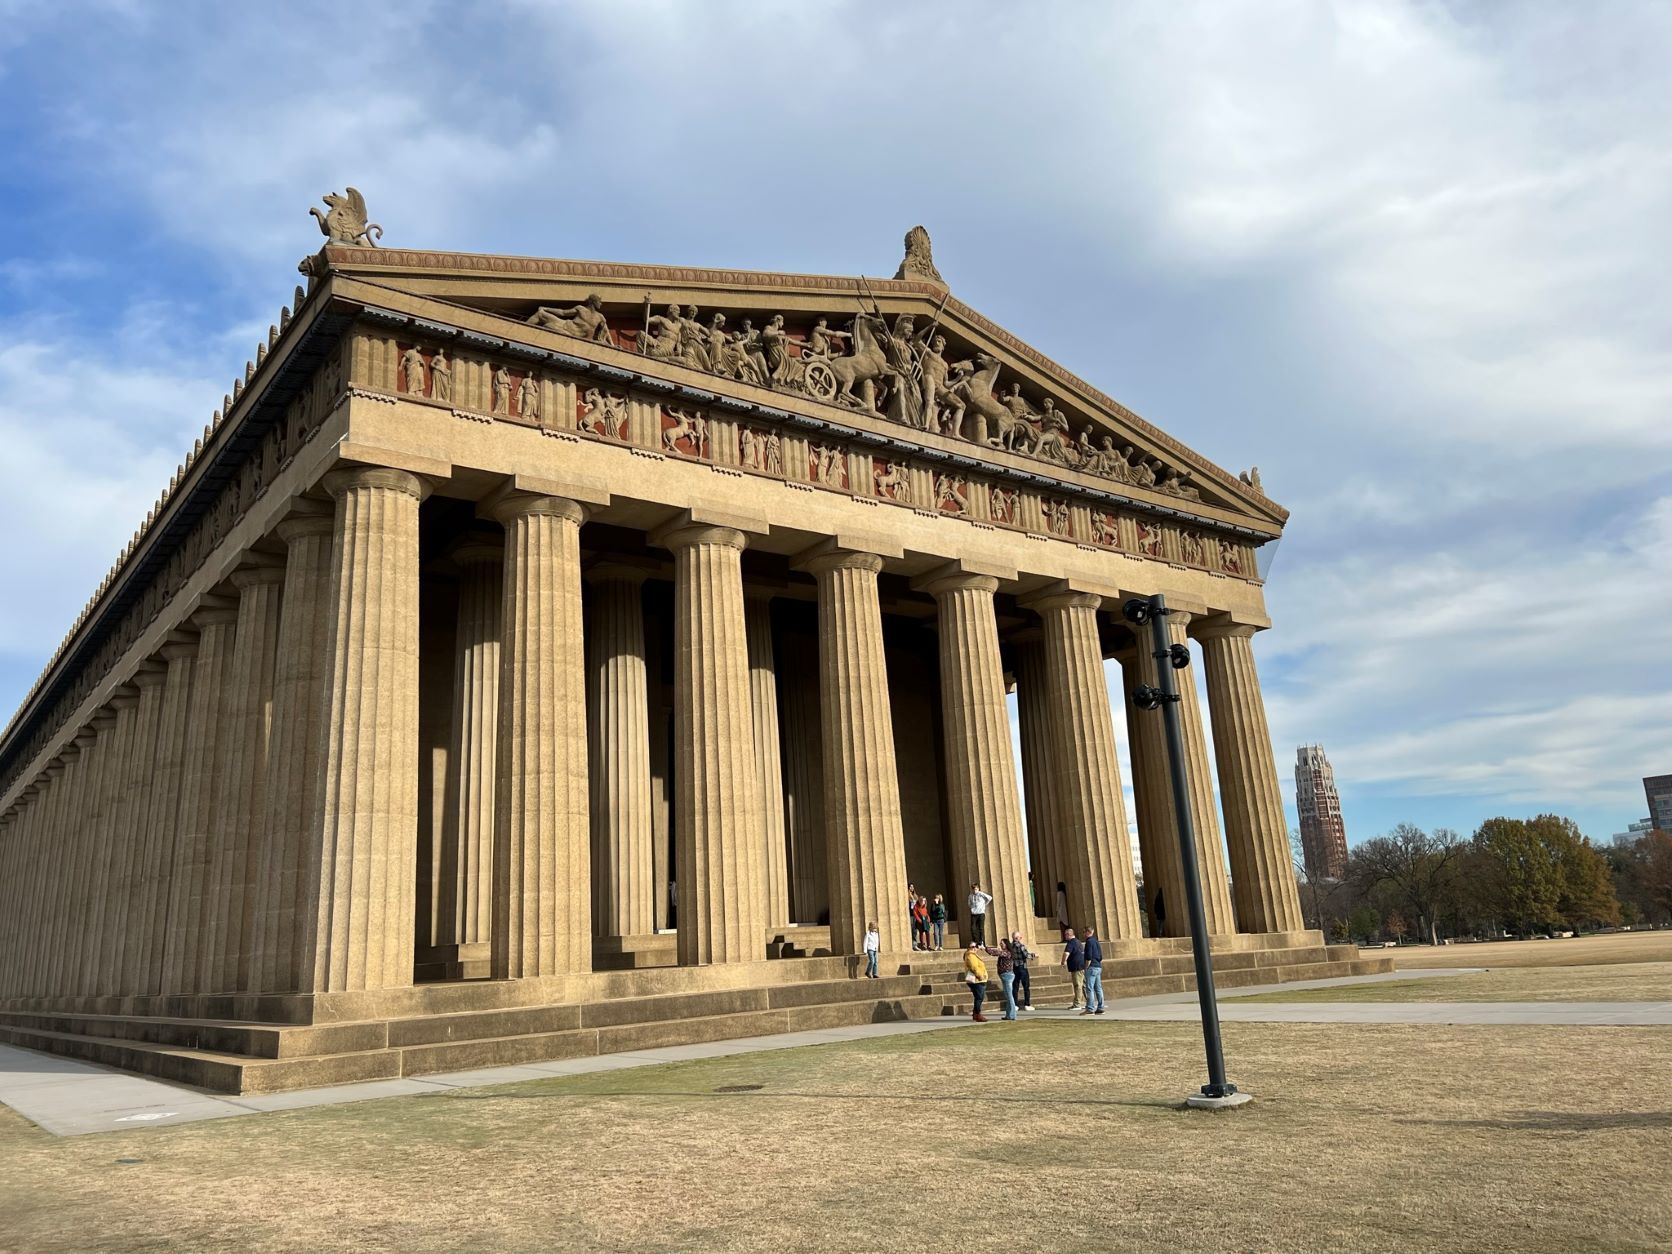 The impressive replica of the Parthenon lies in Centennial Park in Nashville, Tennessee.